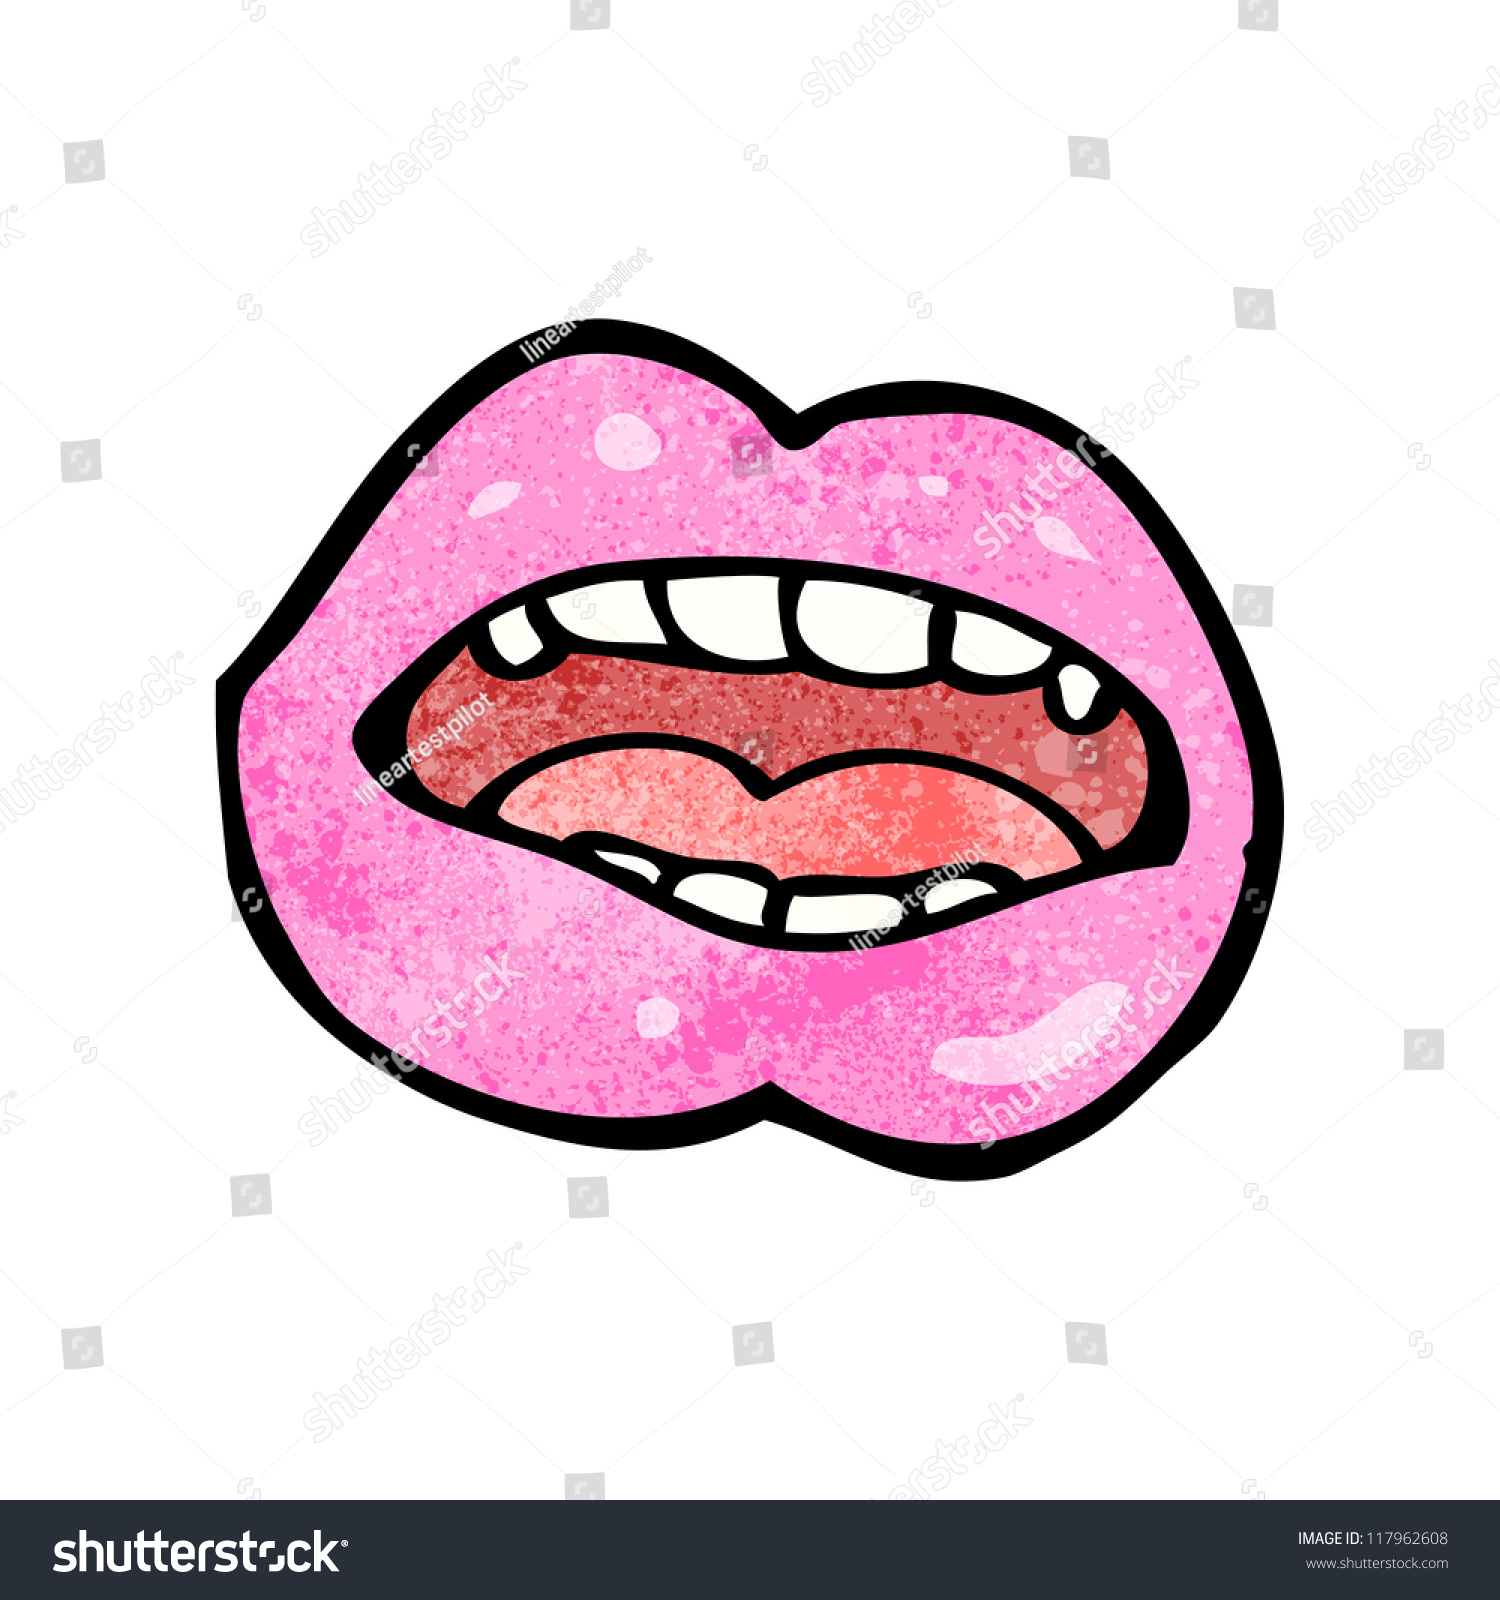 Open Mouth Cartoon Stock Vector Illustration 117962608 : Shutterstock